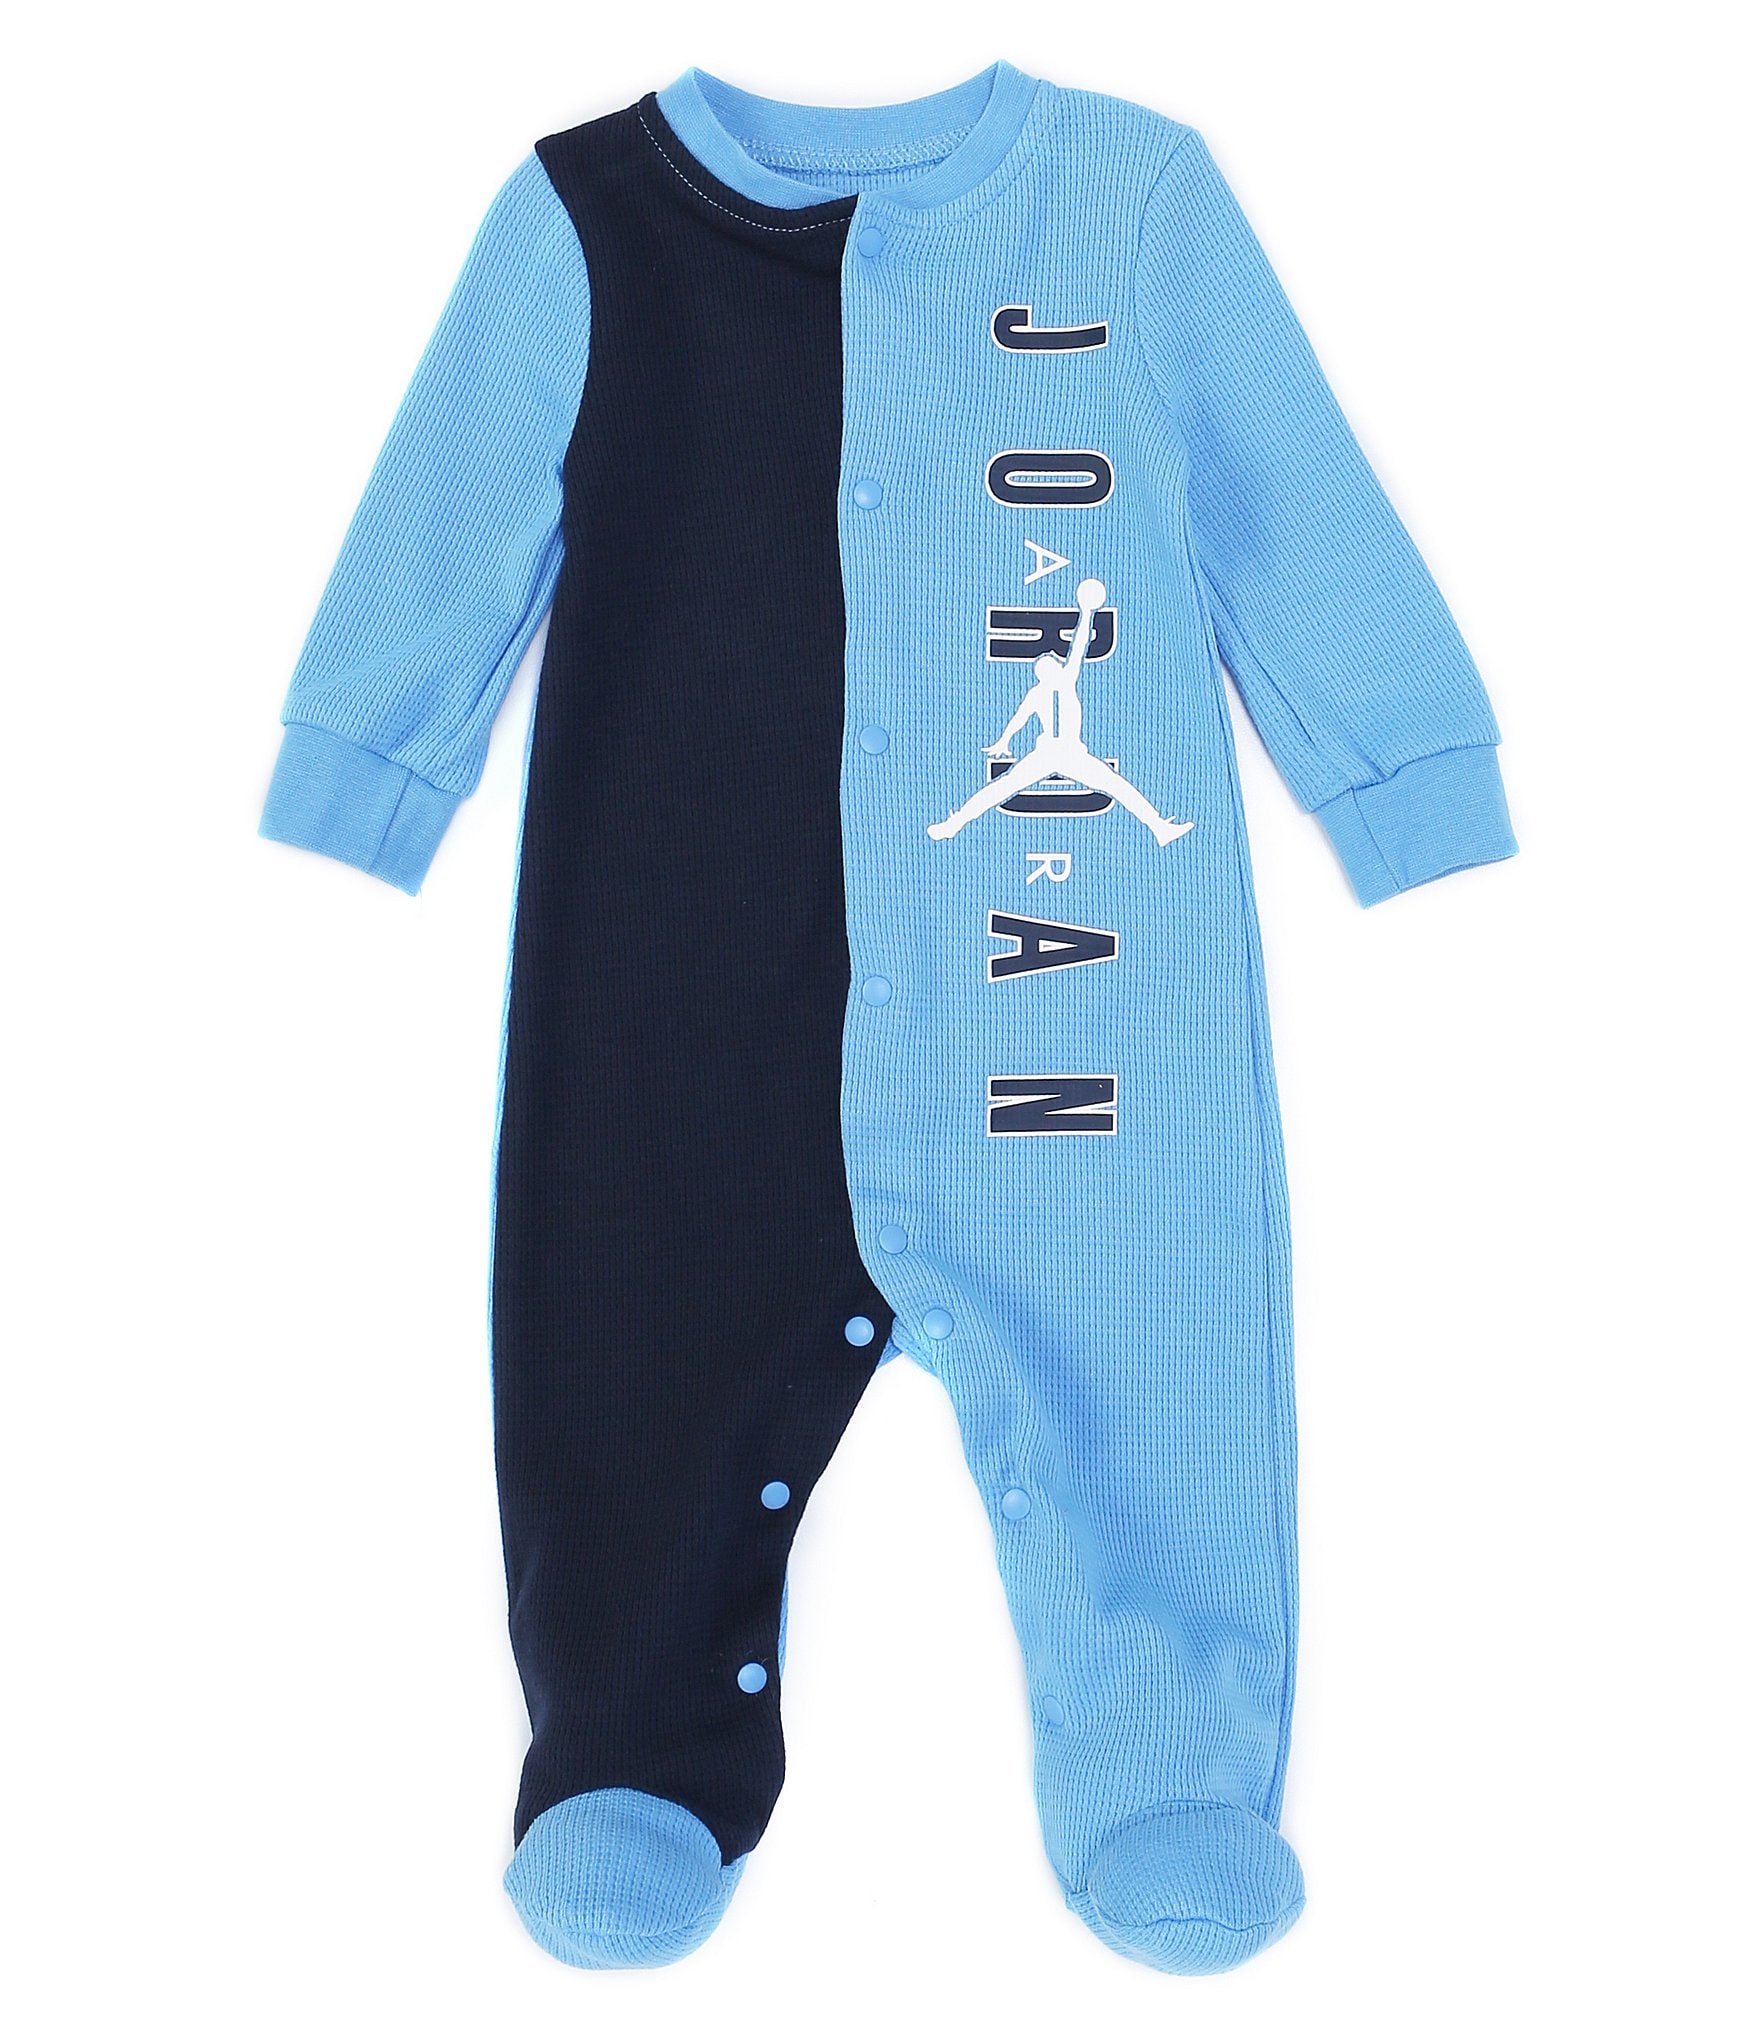 baby blue jordan outfit